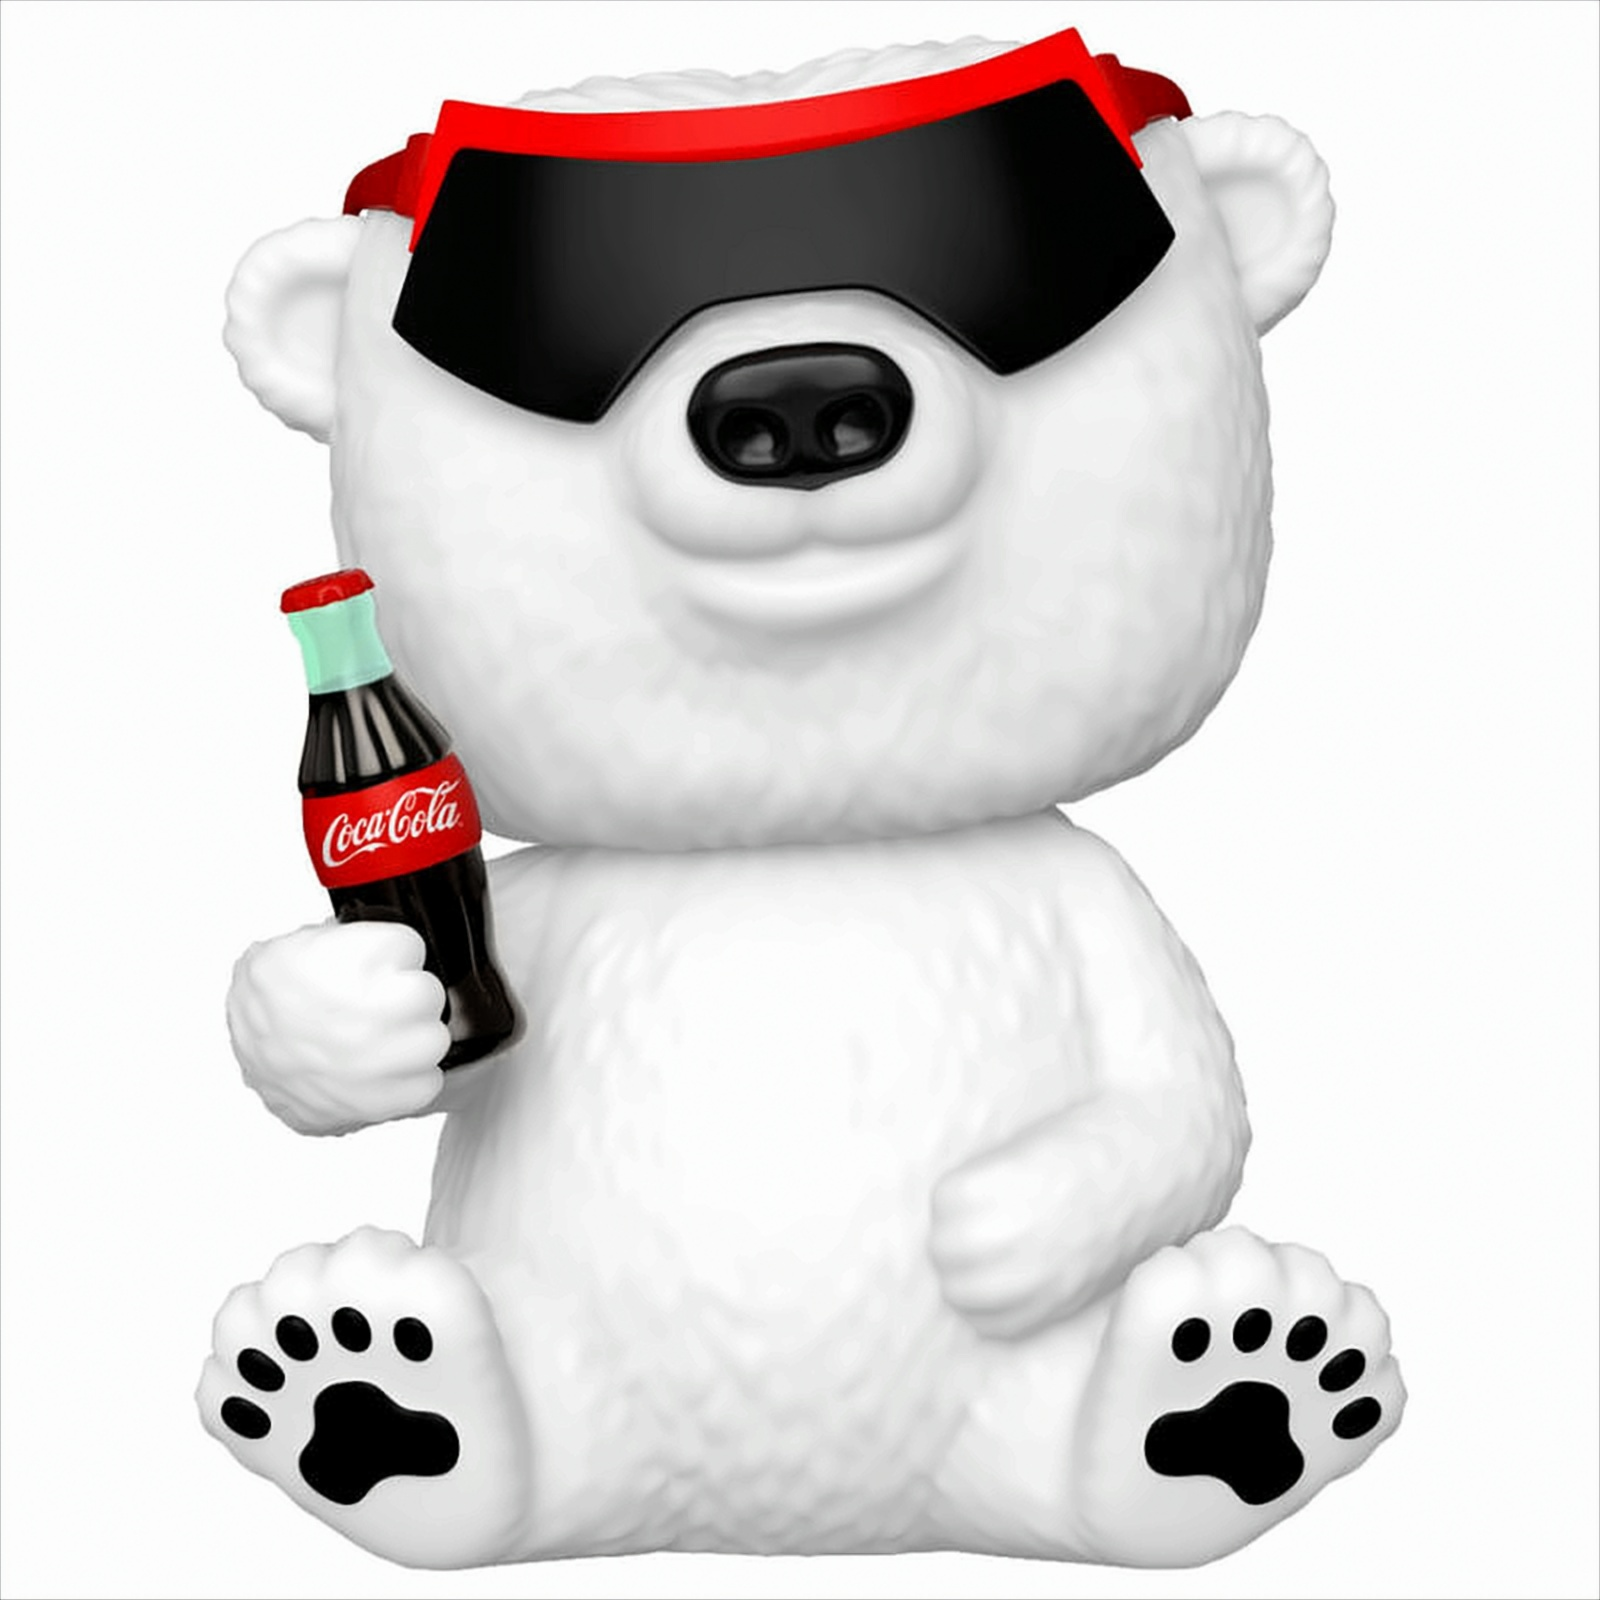 POP - Ad Icons - Bear Coca-Cola Polar - 90s